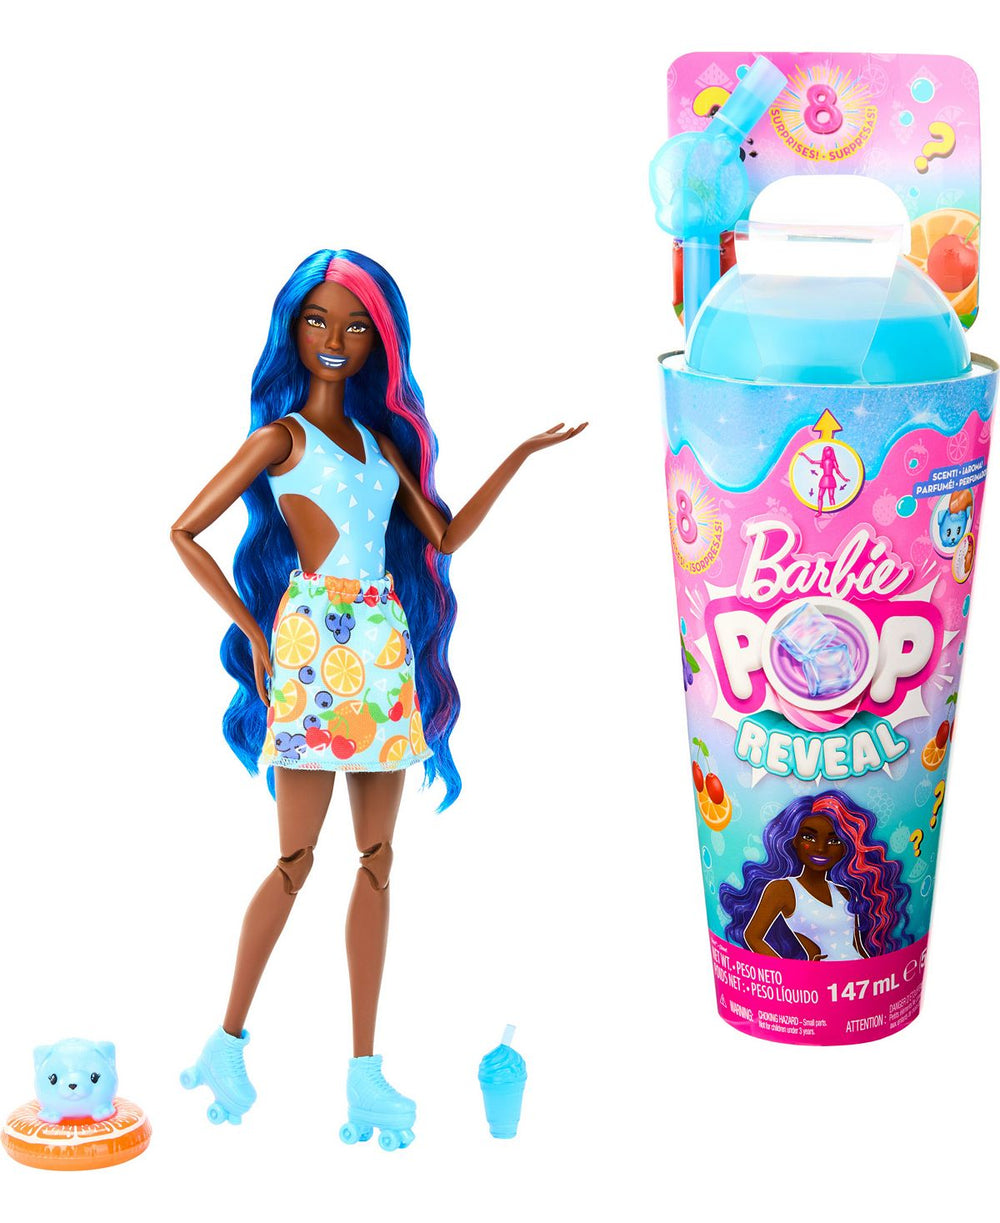 Barbie Pop Reveal Fruit Series - Fruit Punch Doll with 8 Surprises